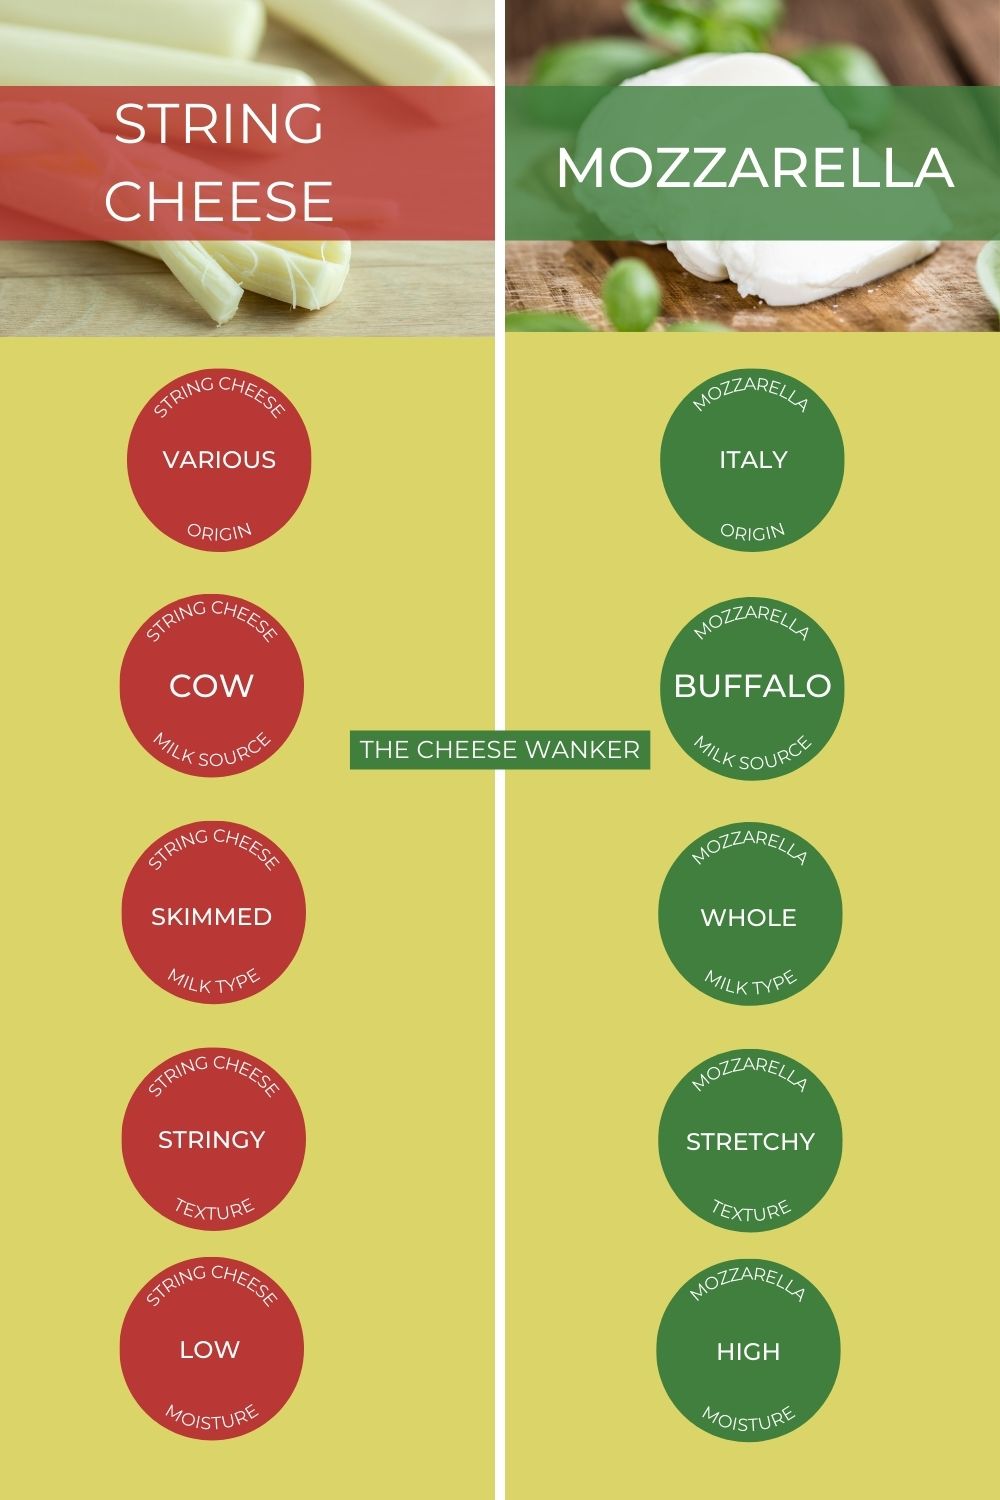 String Cheese vs Mozzarella Infographic